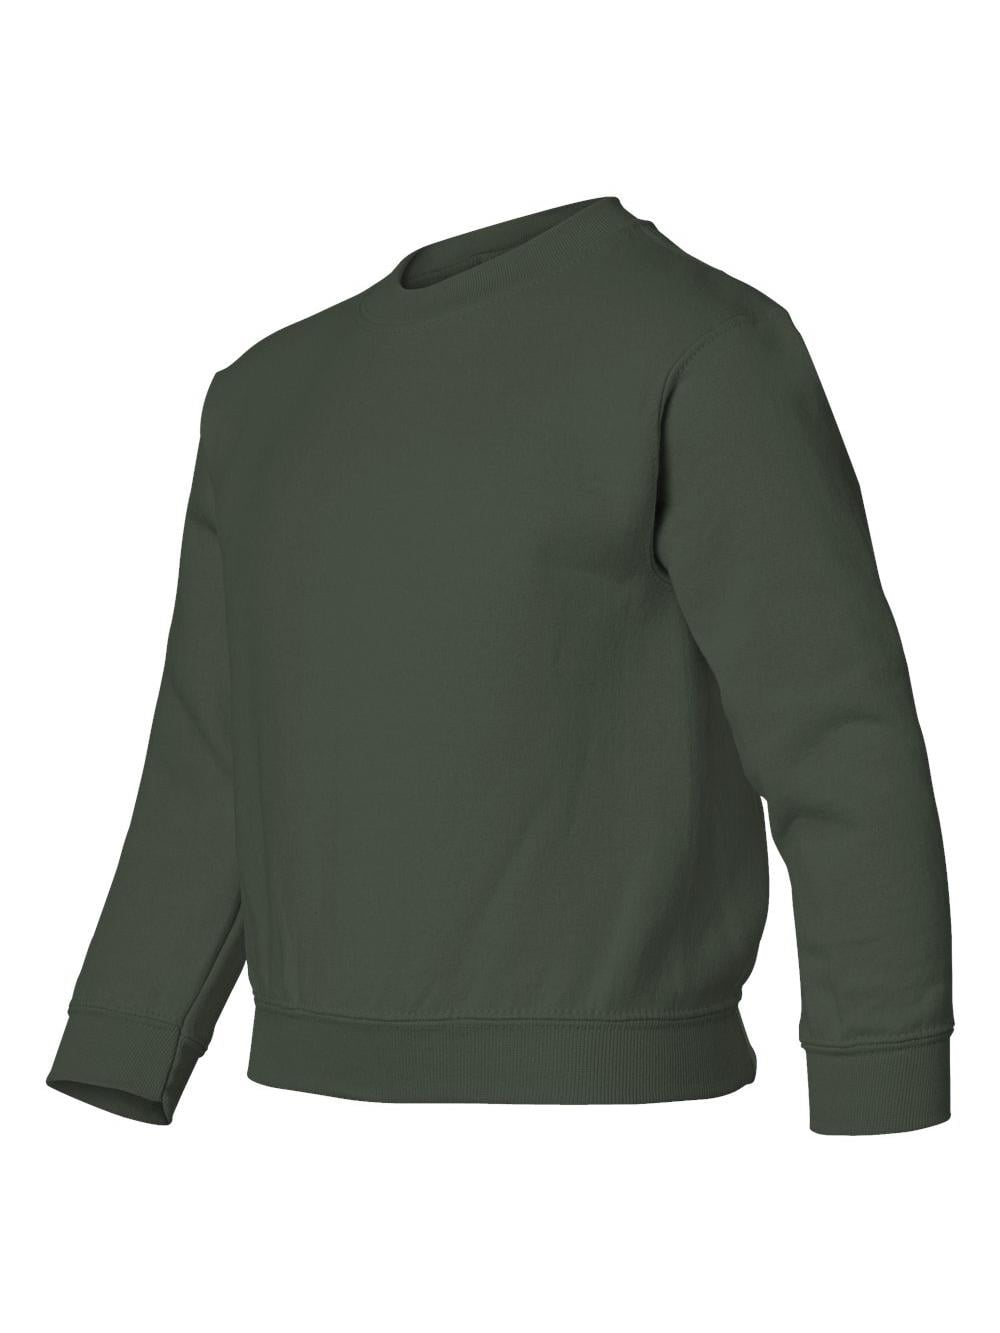 Gildan - Heavy Blend Youth Sweatshirt - 18000B - Forest - Size: XS